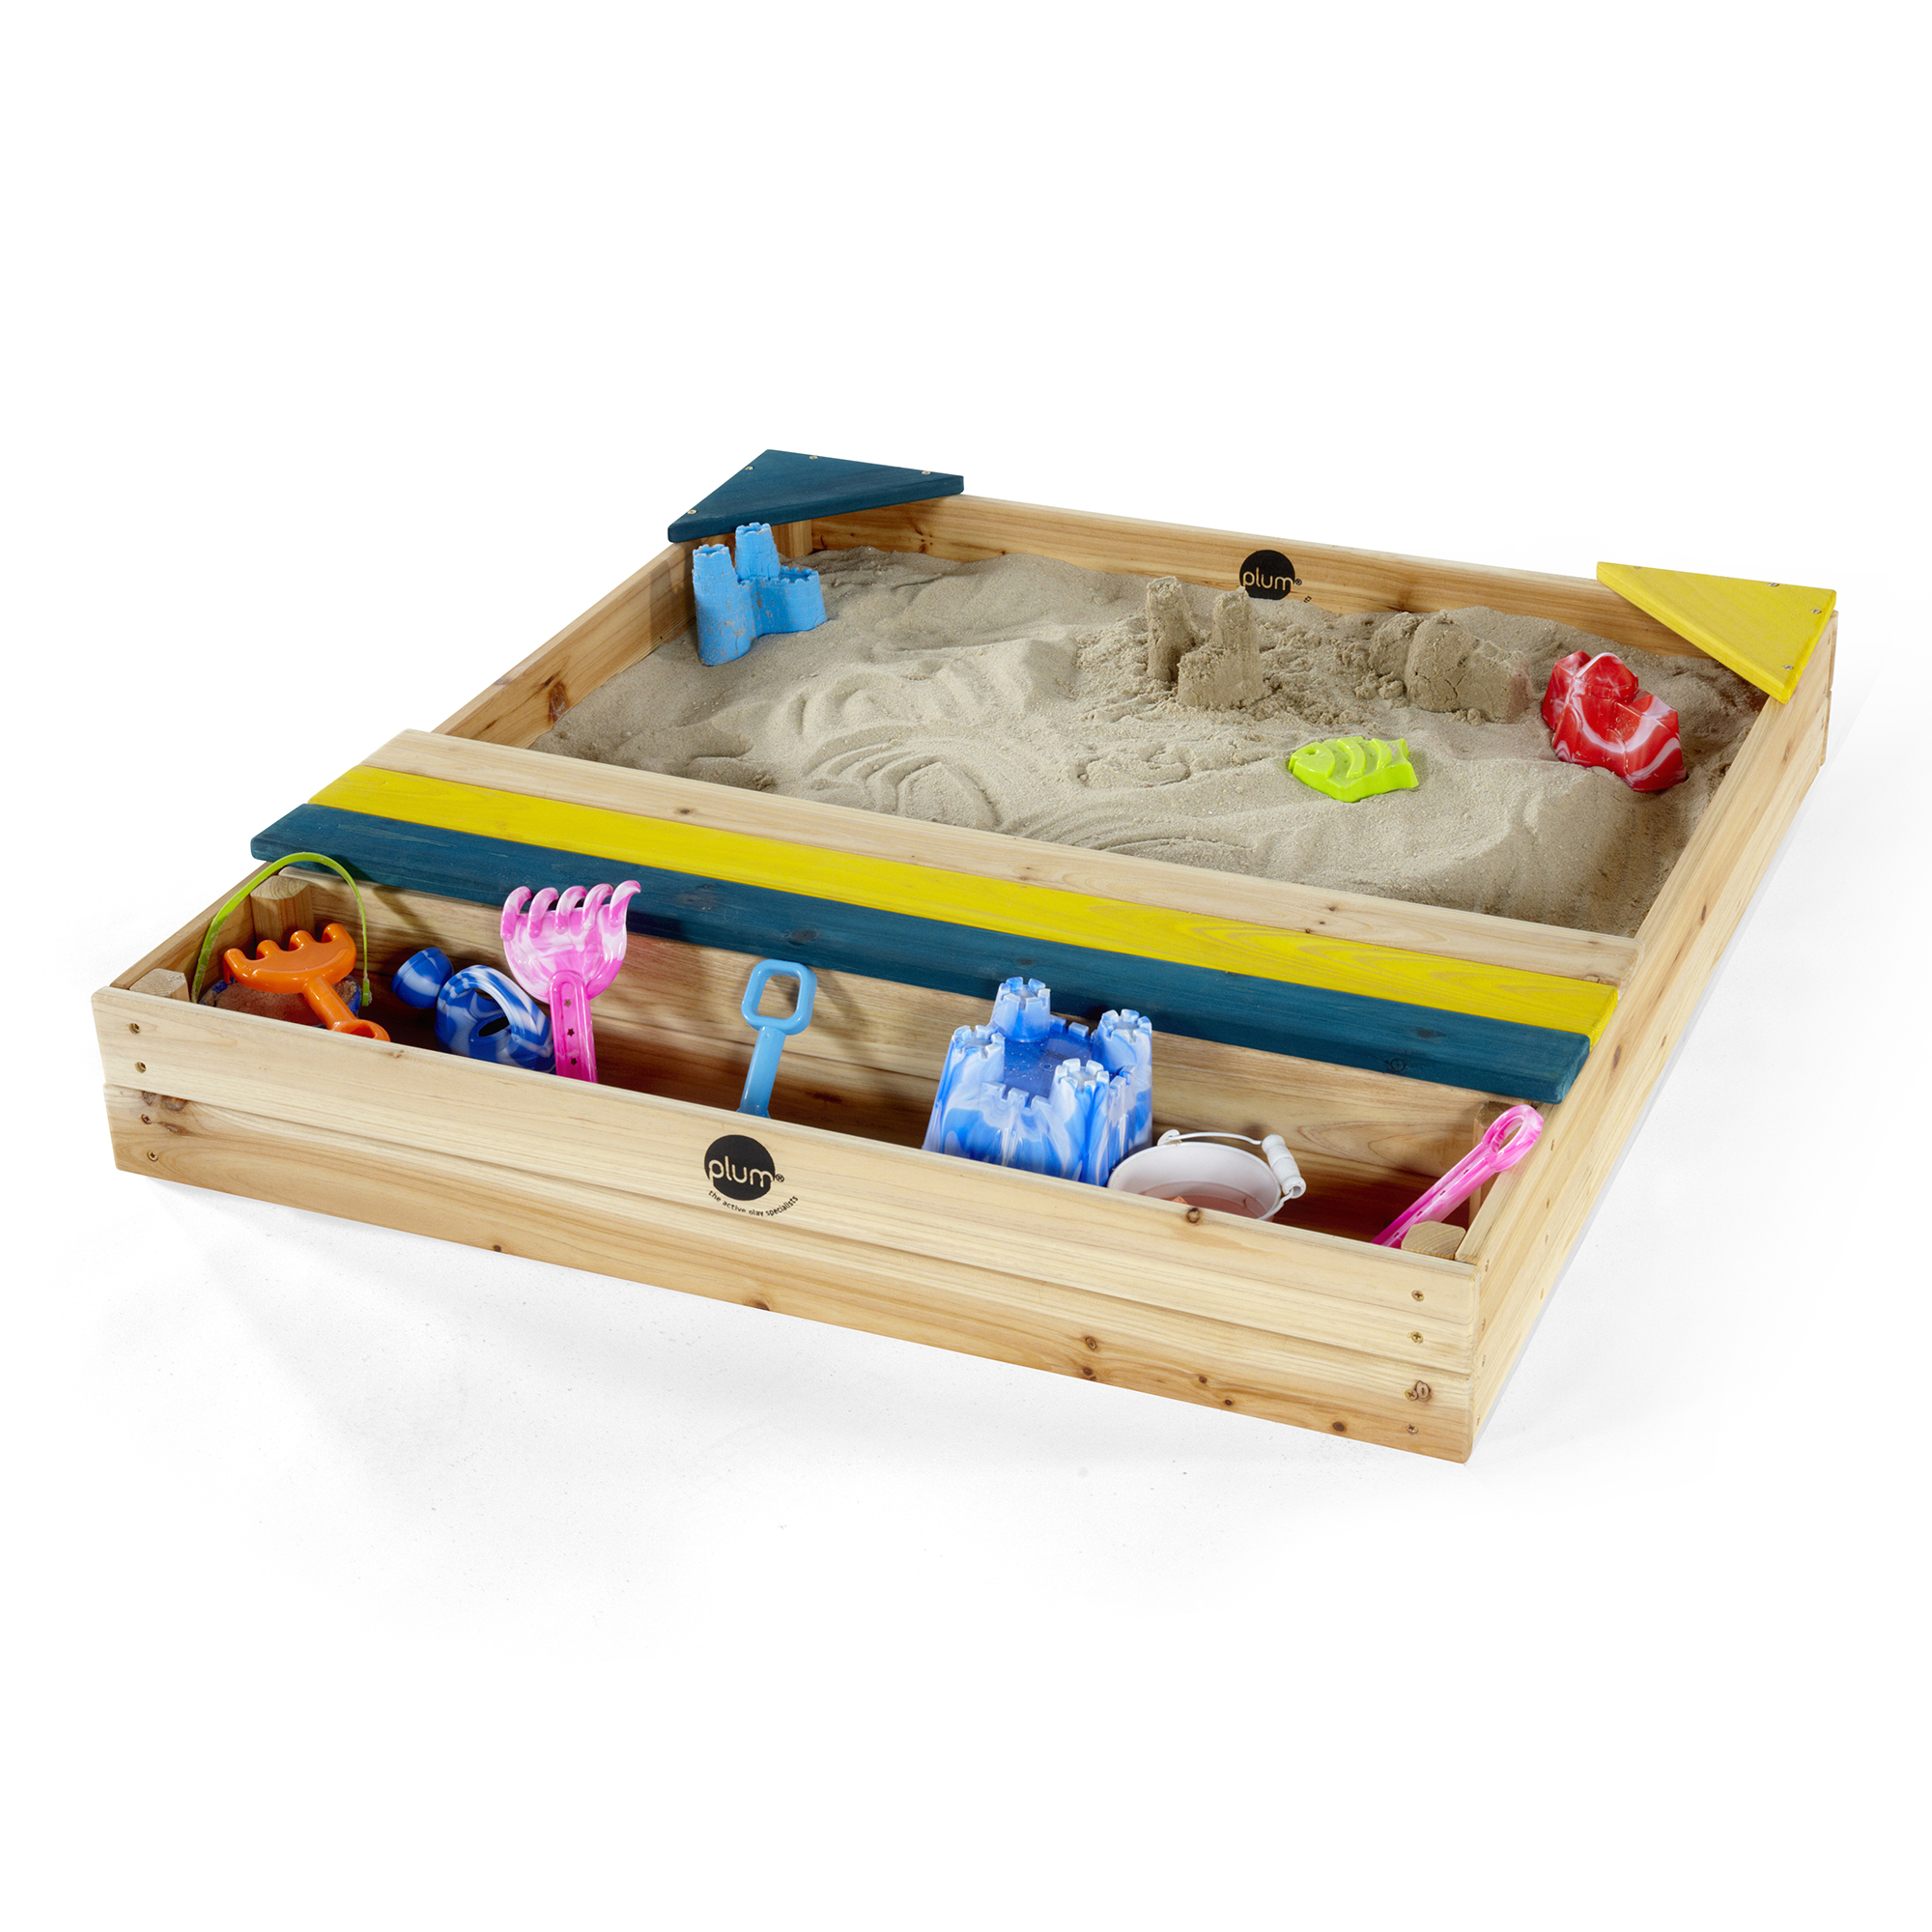 Plum Play Store-it Wooden Sandbox - image 3 of 9